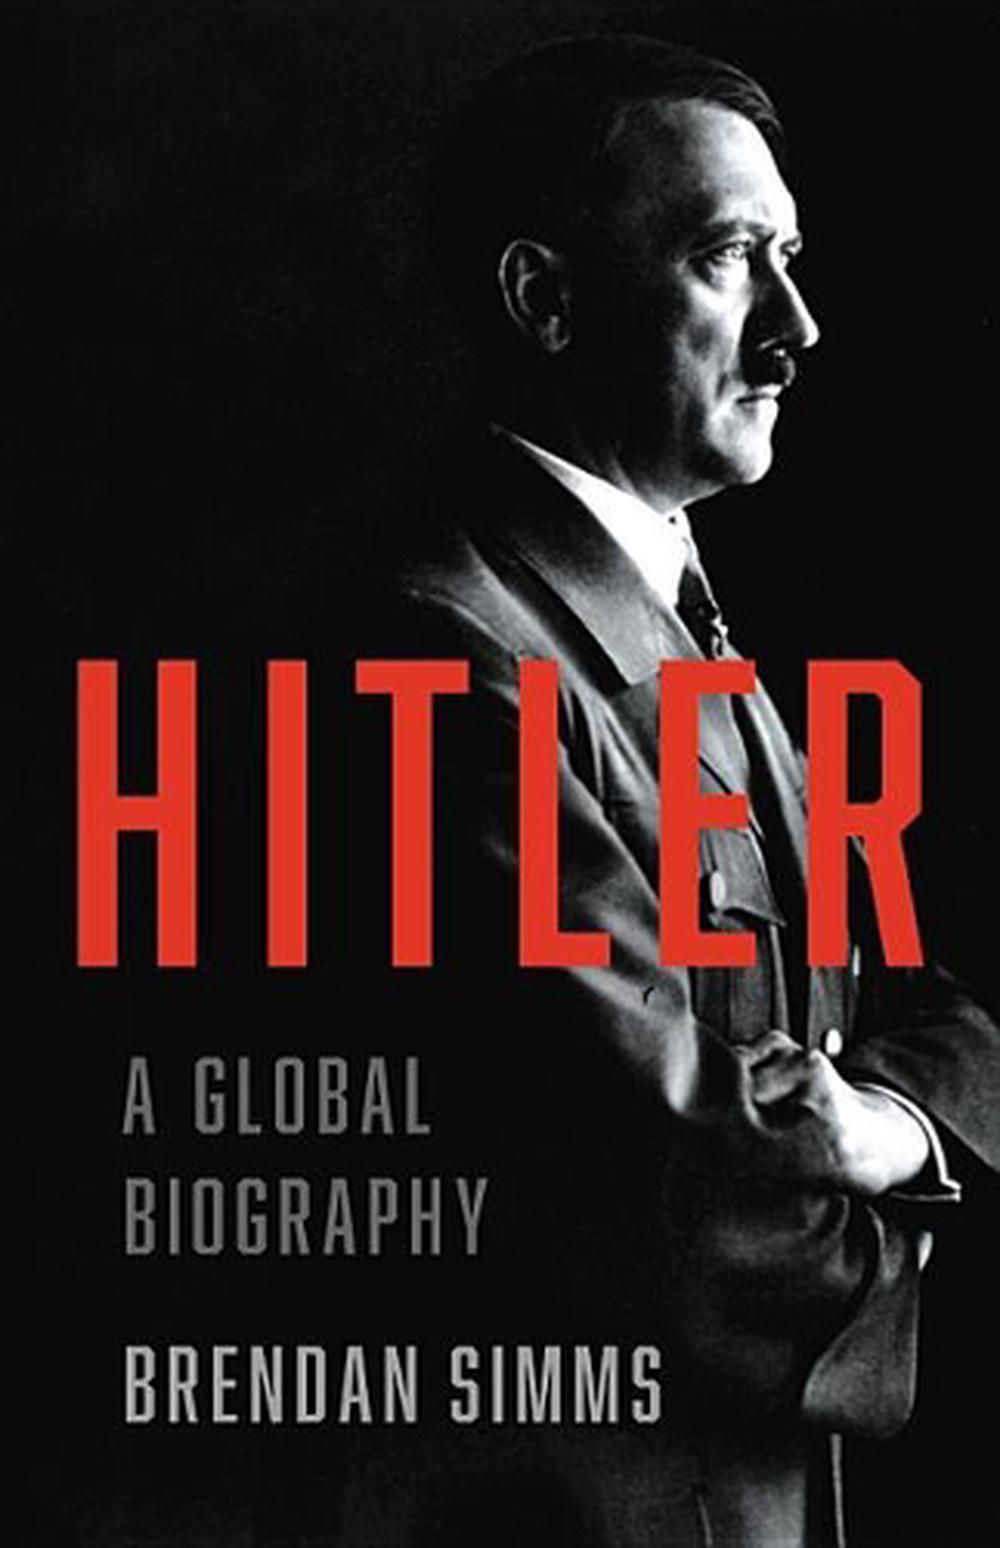 biography of hitler in short